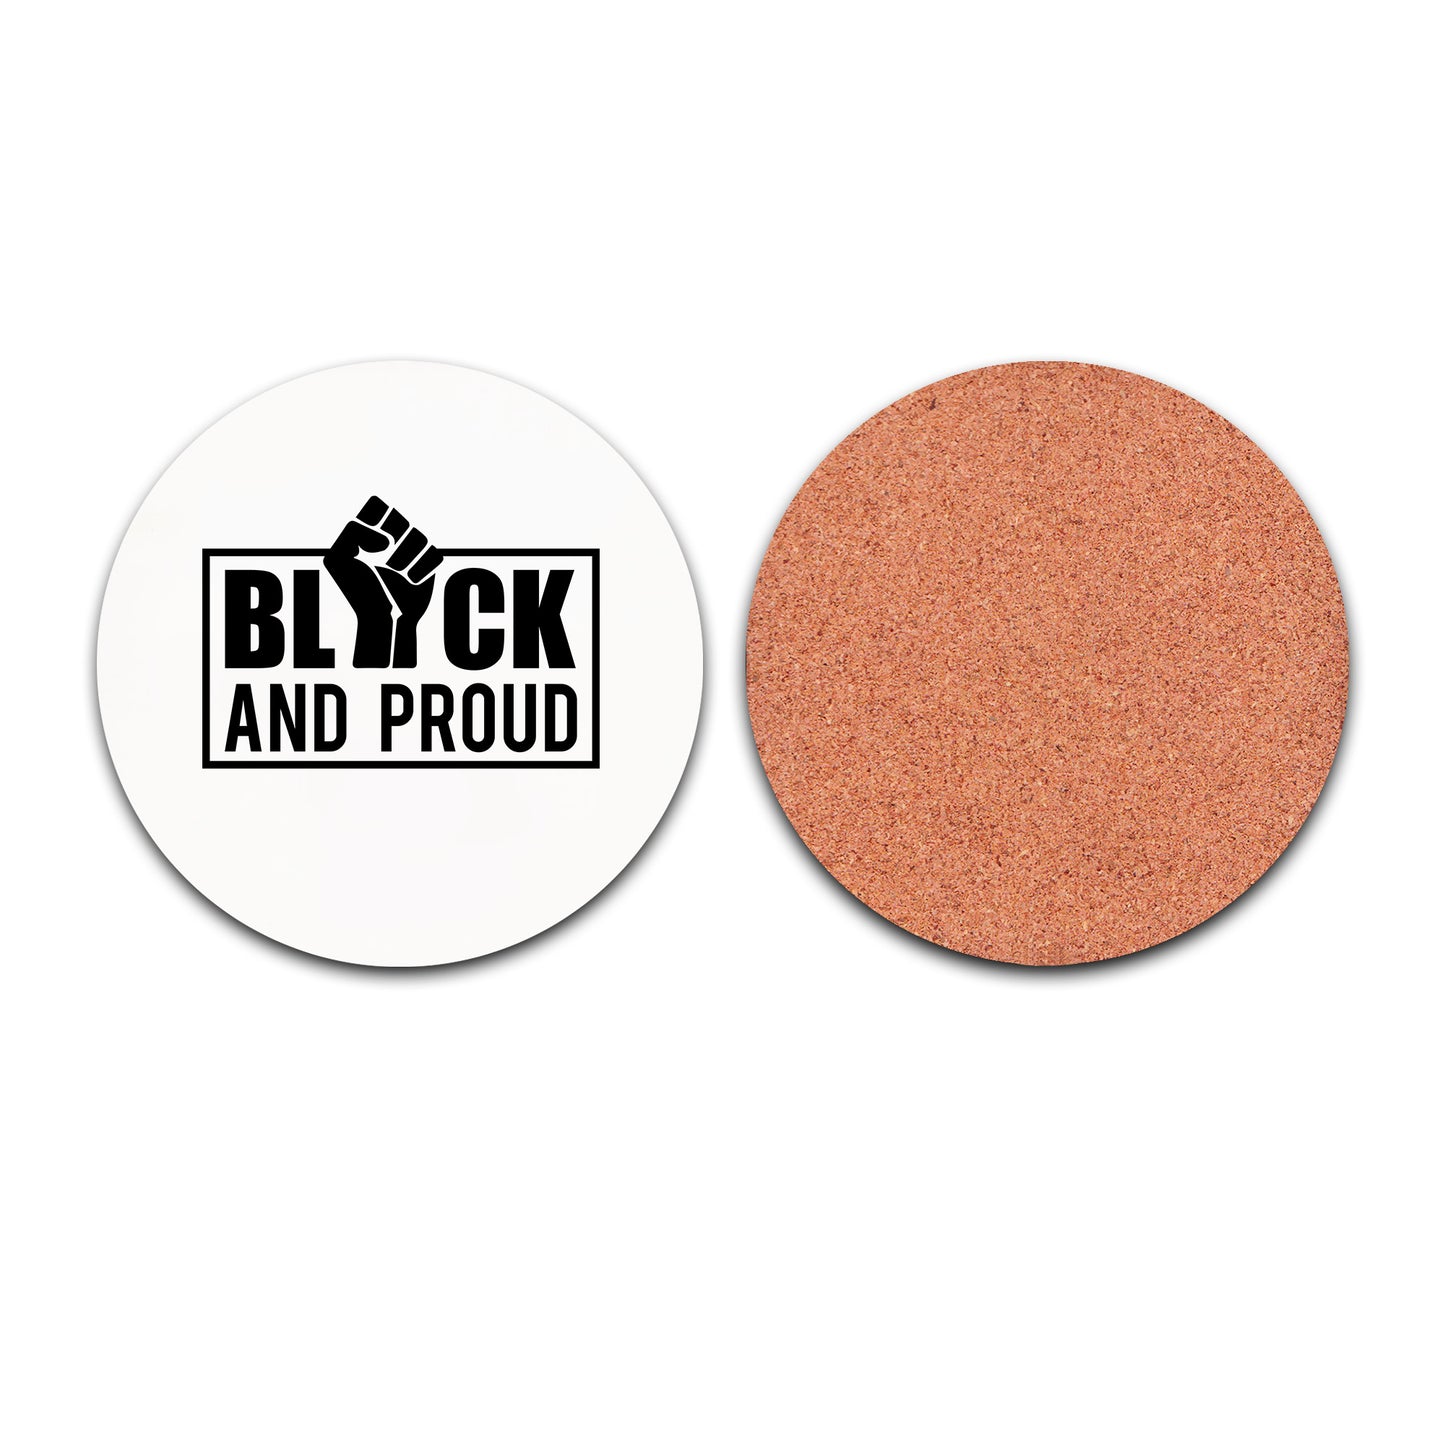 Black and Whie 3.5"x3.5' Black and Proud Round Ceramic Coaster